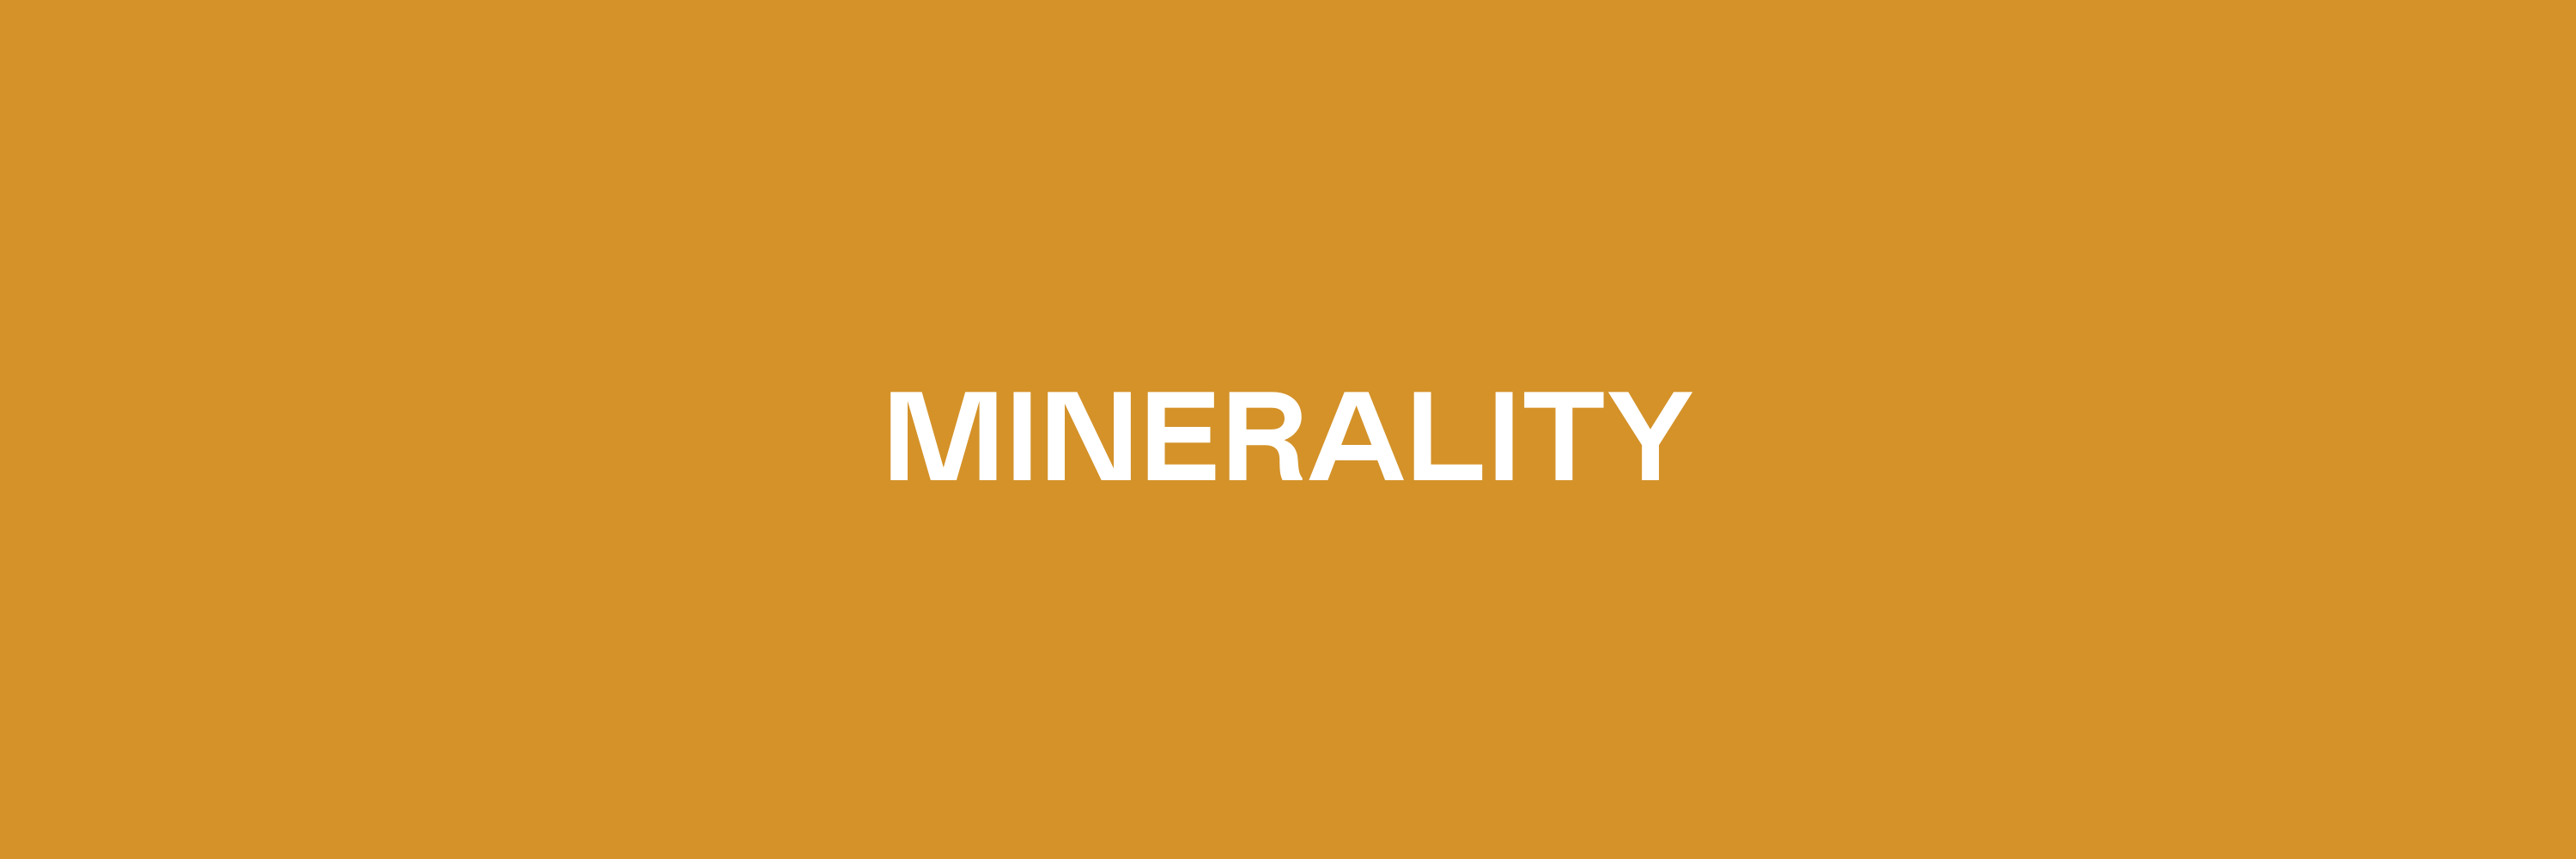 Minerality